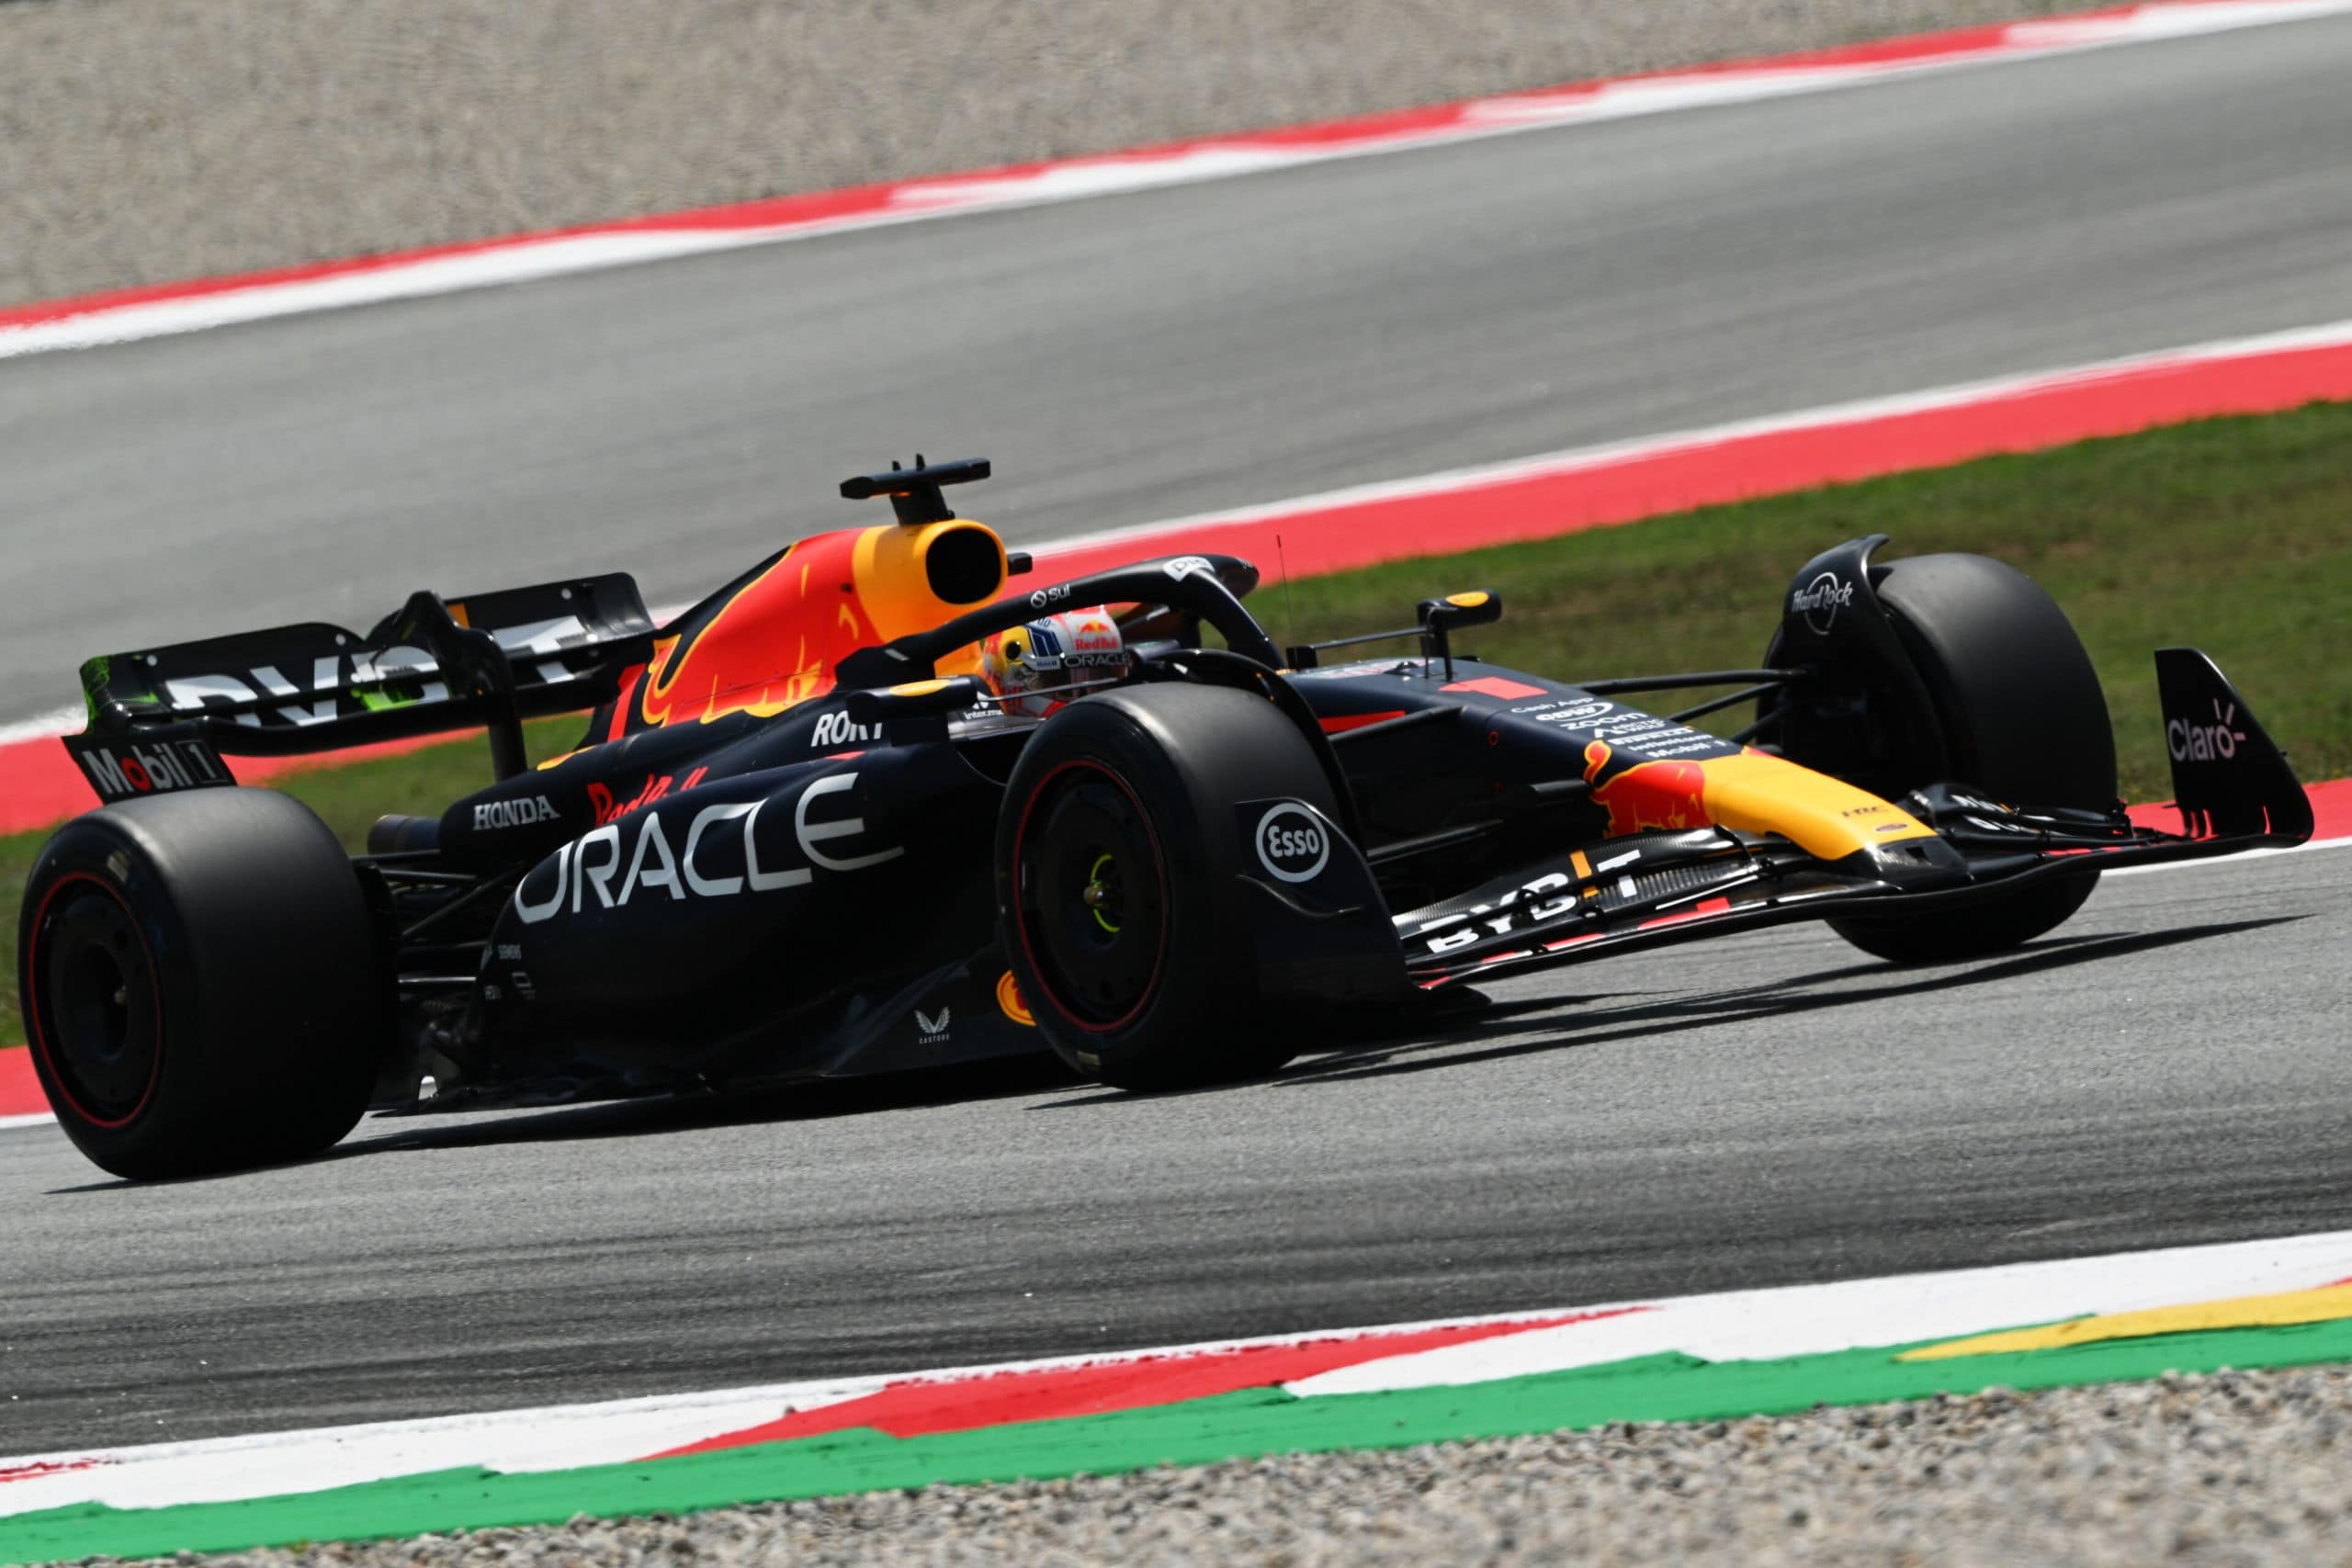 F1 Grand Prix Of Spain Practice